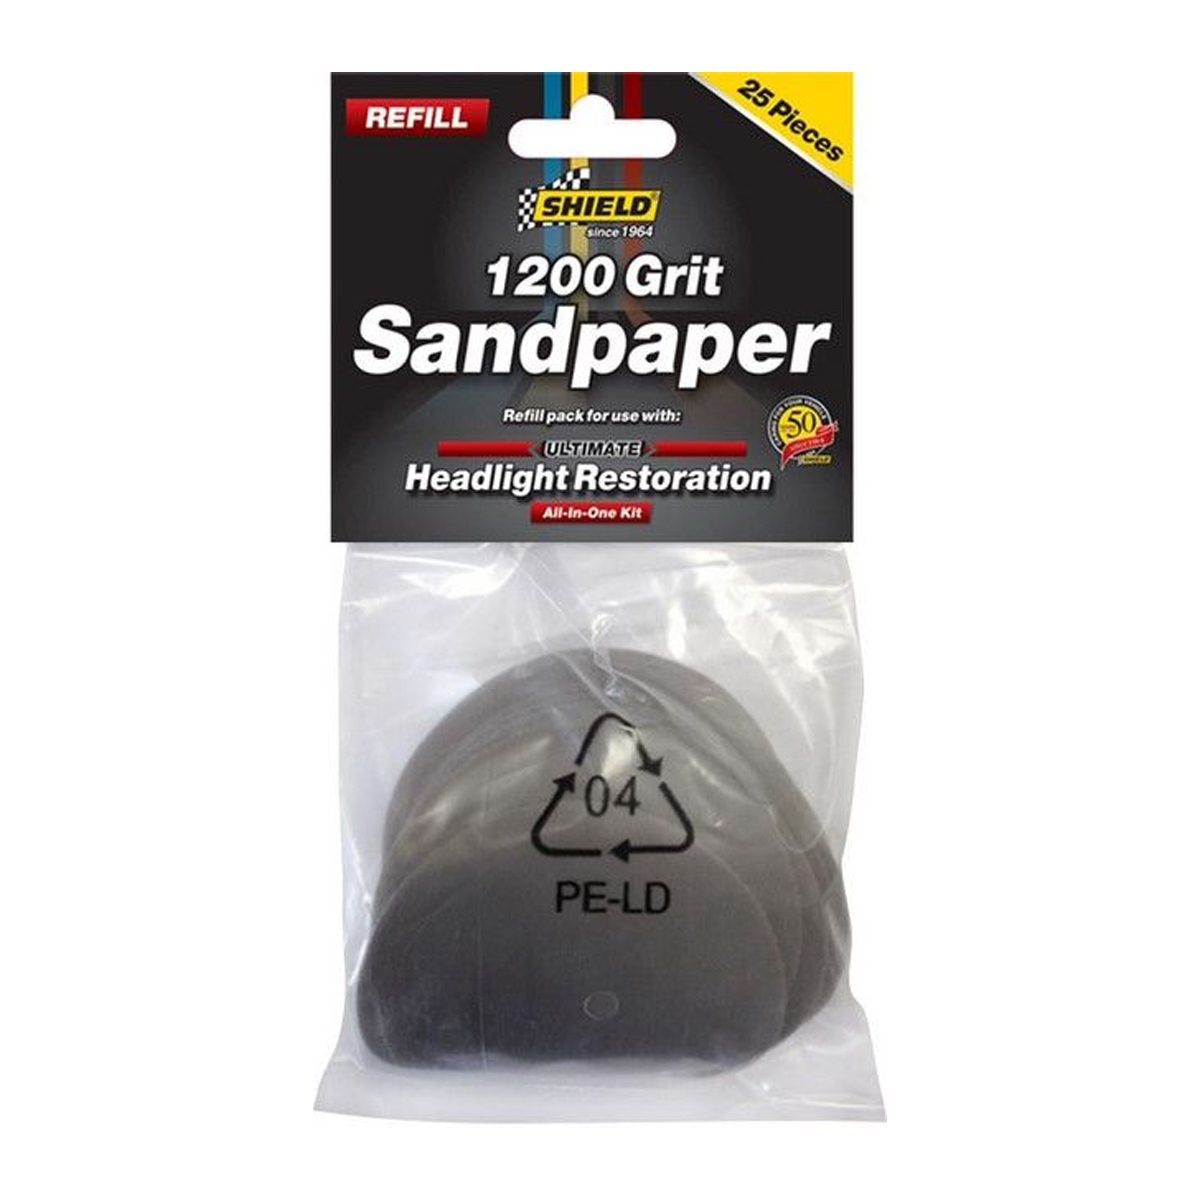 Shield Headlight Restoration Kit Sandpaper Refill (25 Pieces)